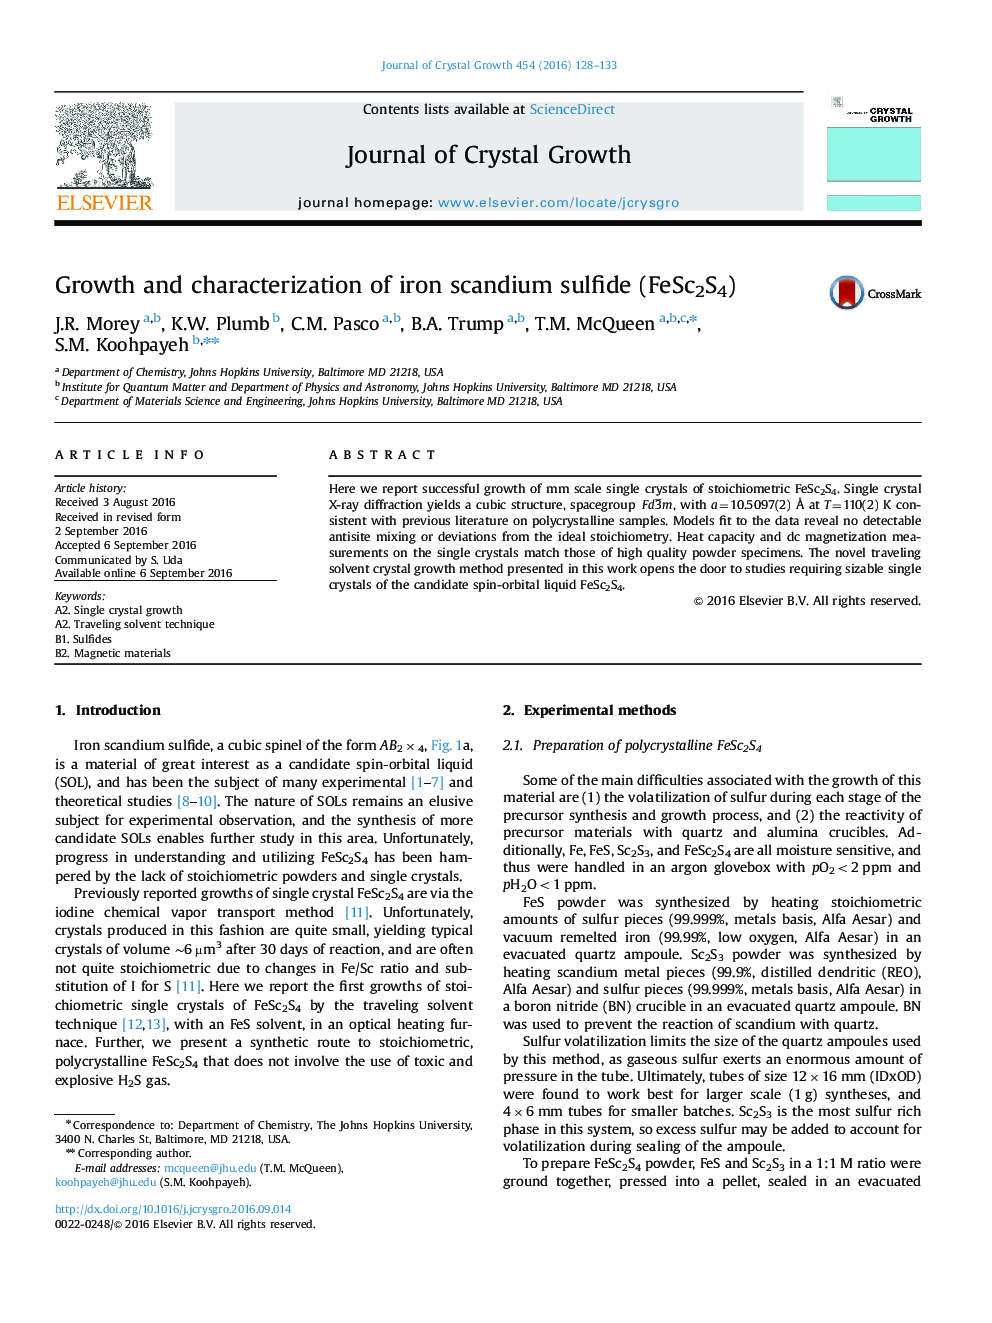 Growth and characterization of iron scandium sulfide (FeSc2S4)